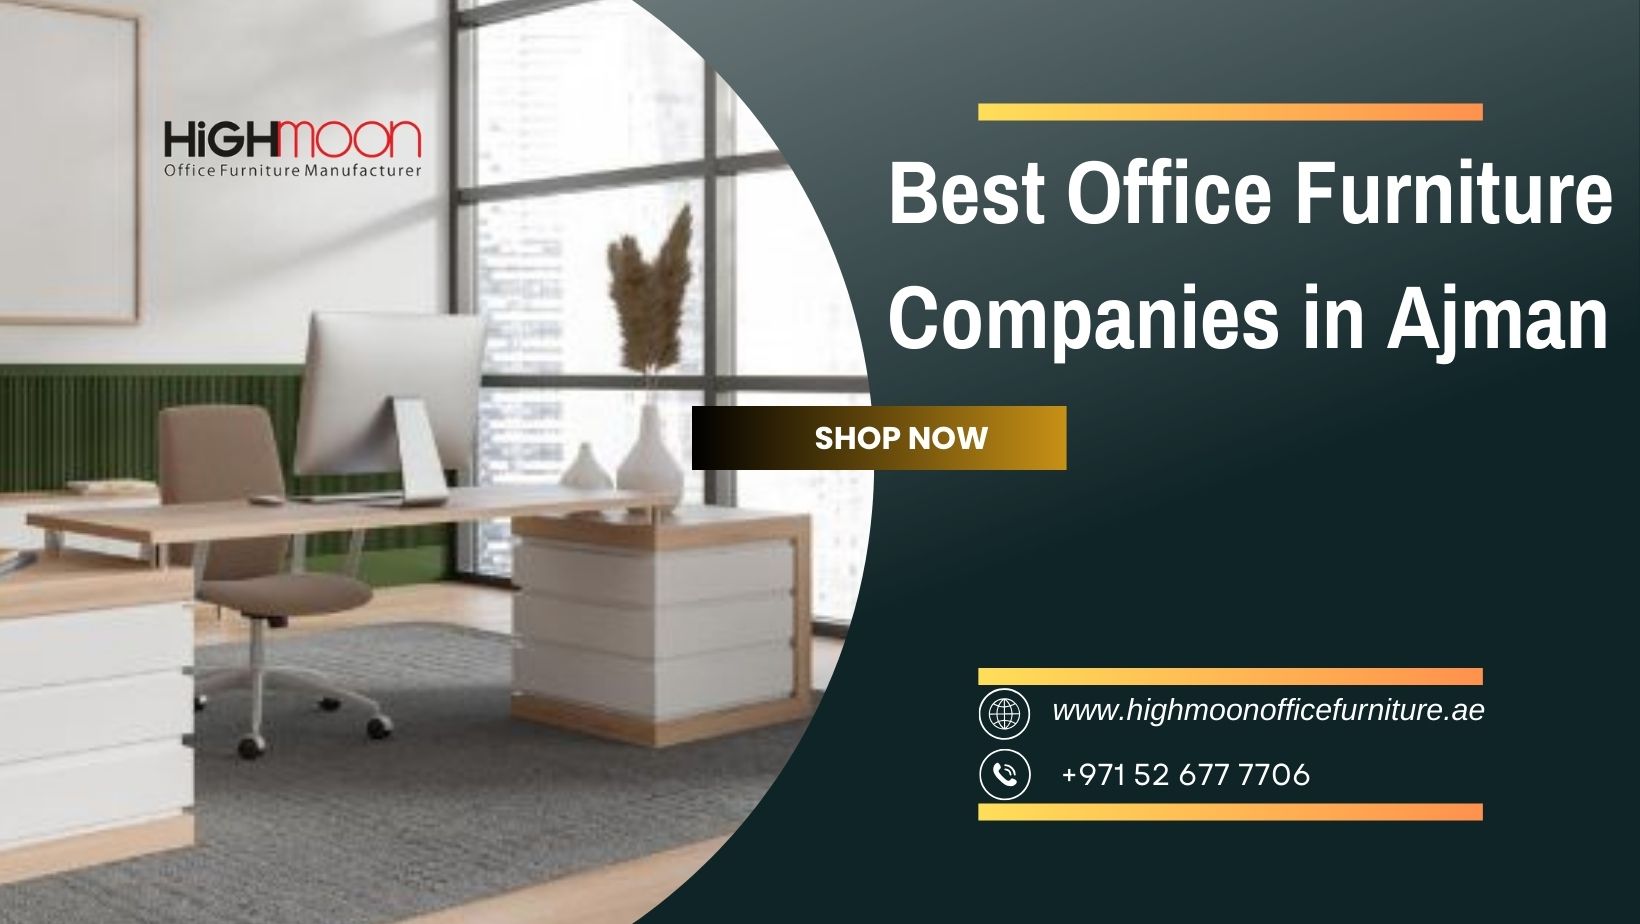 Best Office Furniture Companies in Ajman